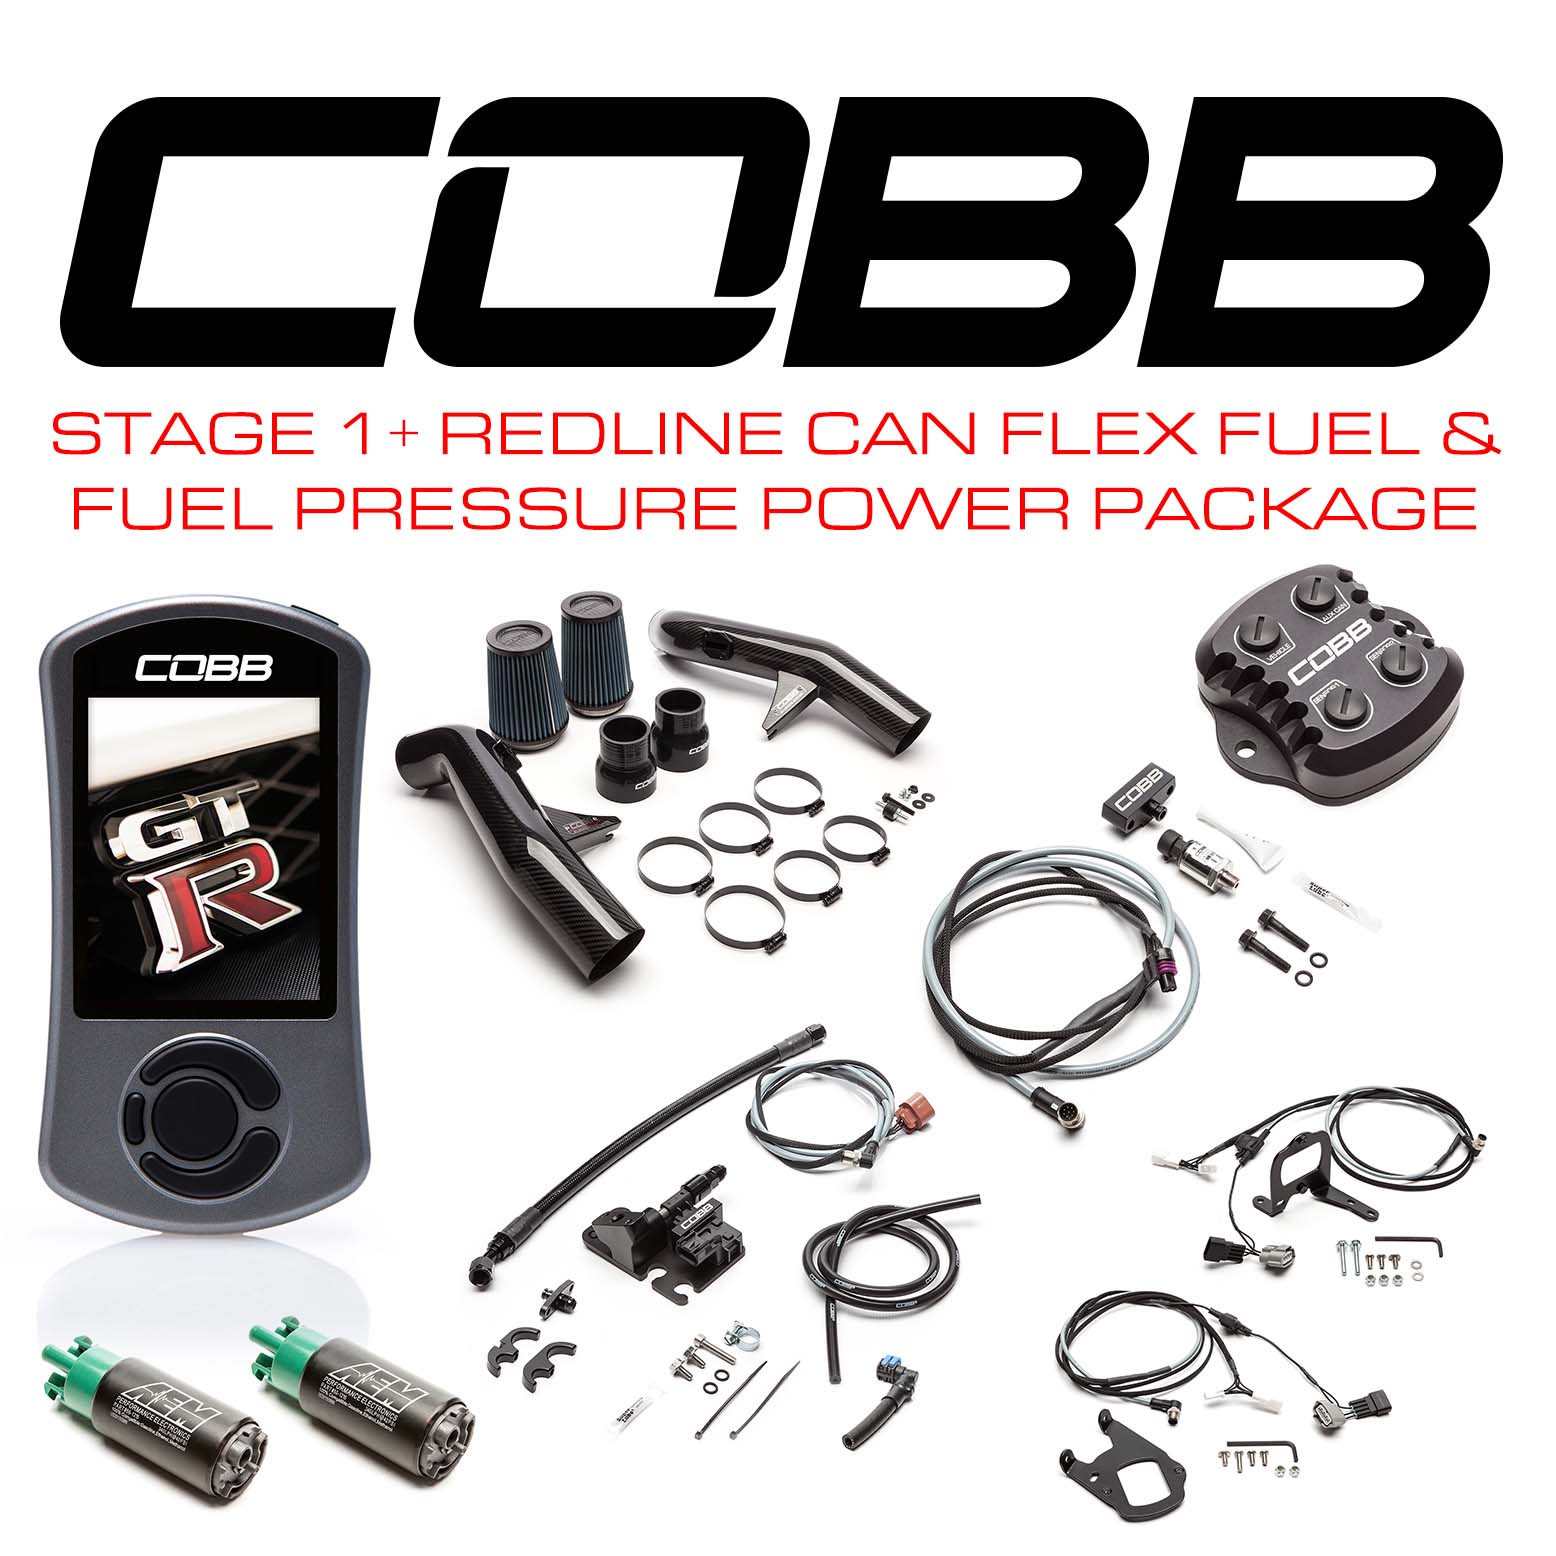 Nissan GT-R Stage 1+ Redline Carbon Fiber CAN Flex Fuel & Fuel Pressure Power Package w/TCM Flashing (NIS-006) 2009-2014